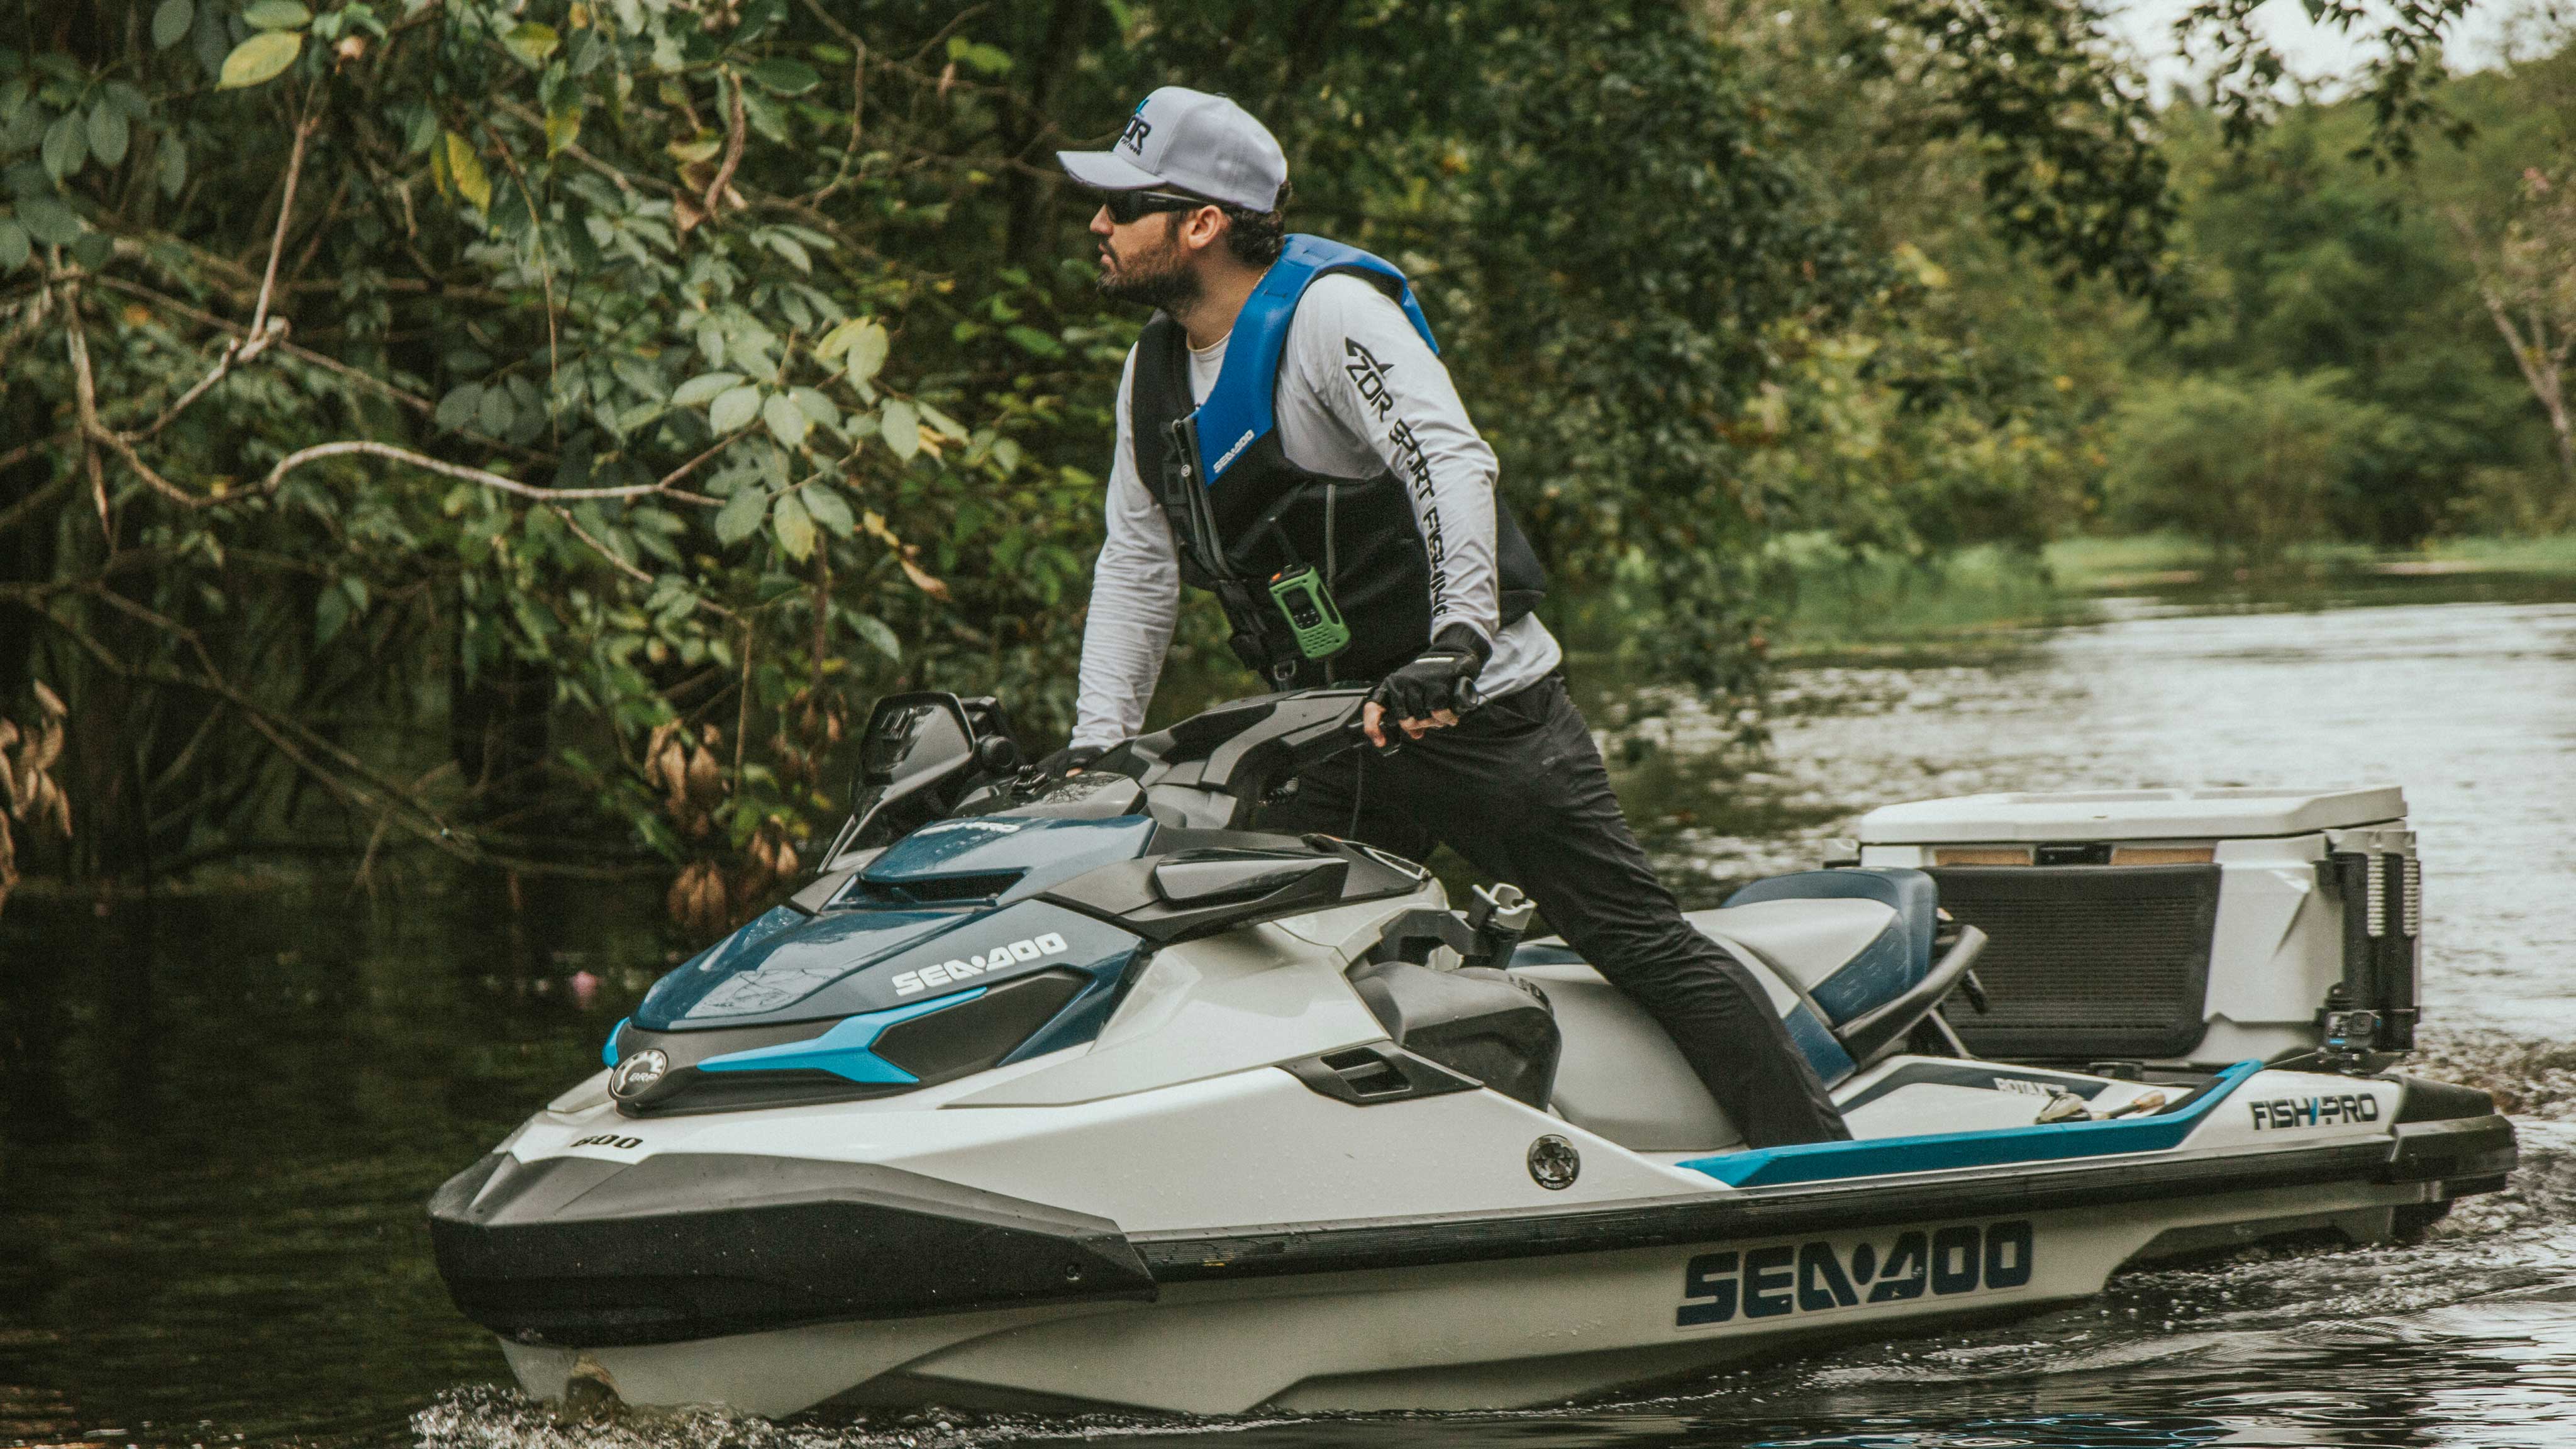 Fernando Zor driving a Sea-Doo FishPro Sport in Amazonia